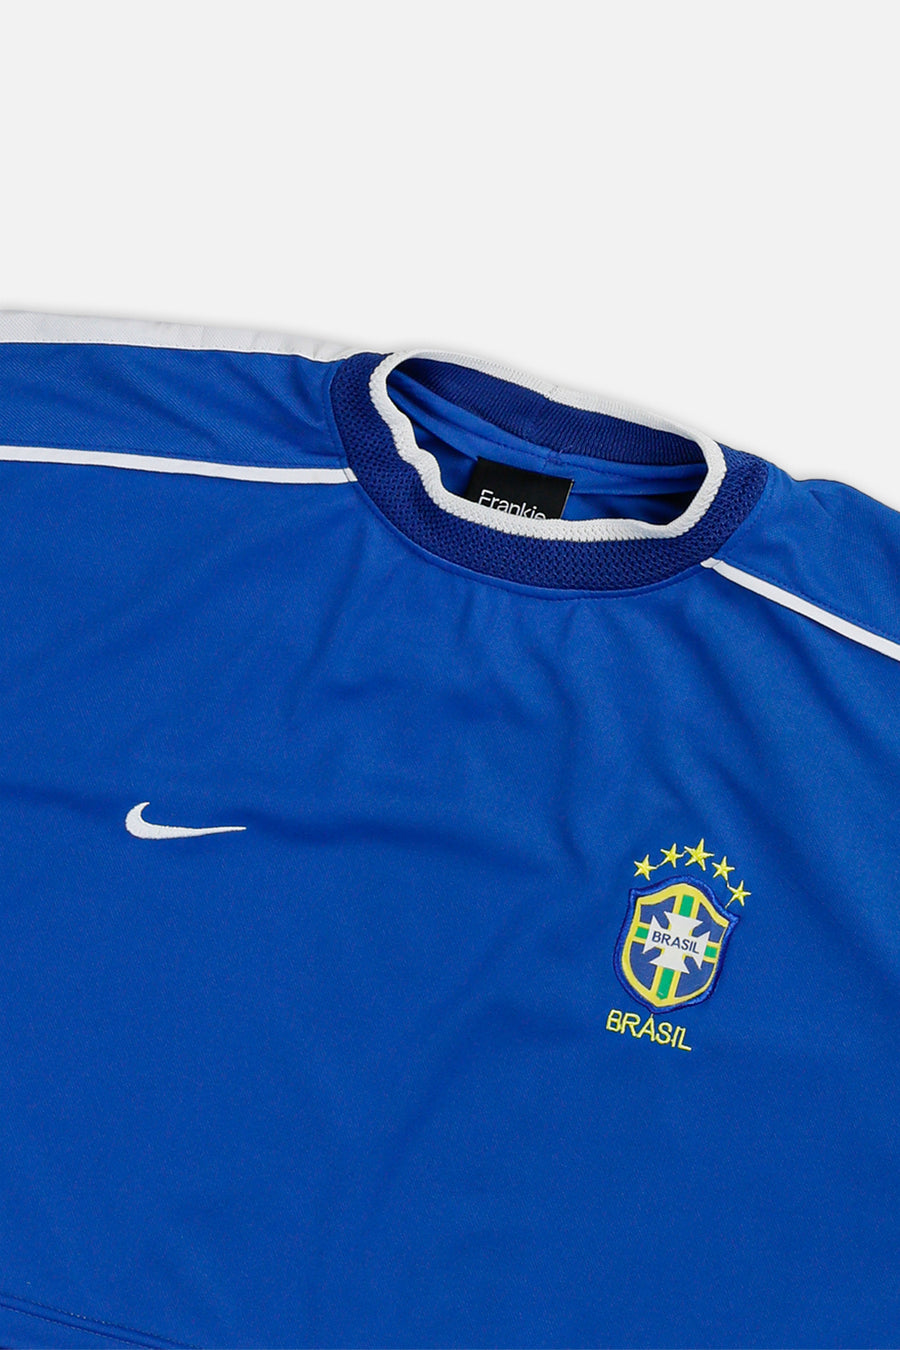 Rework Crop Brazil Soccer Jersey - L